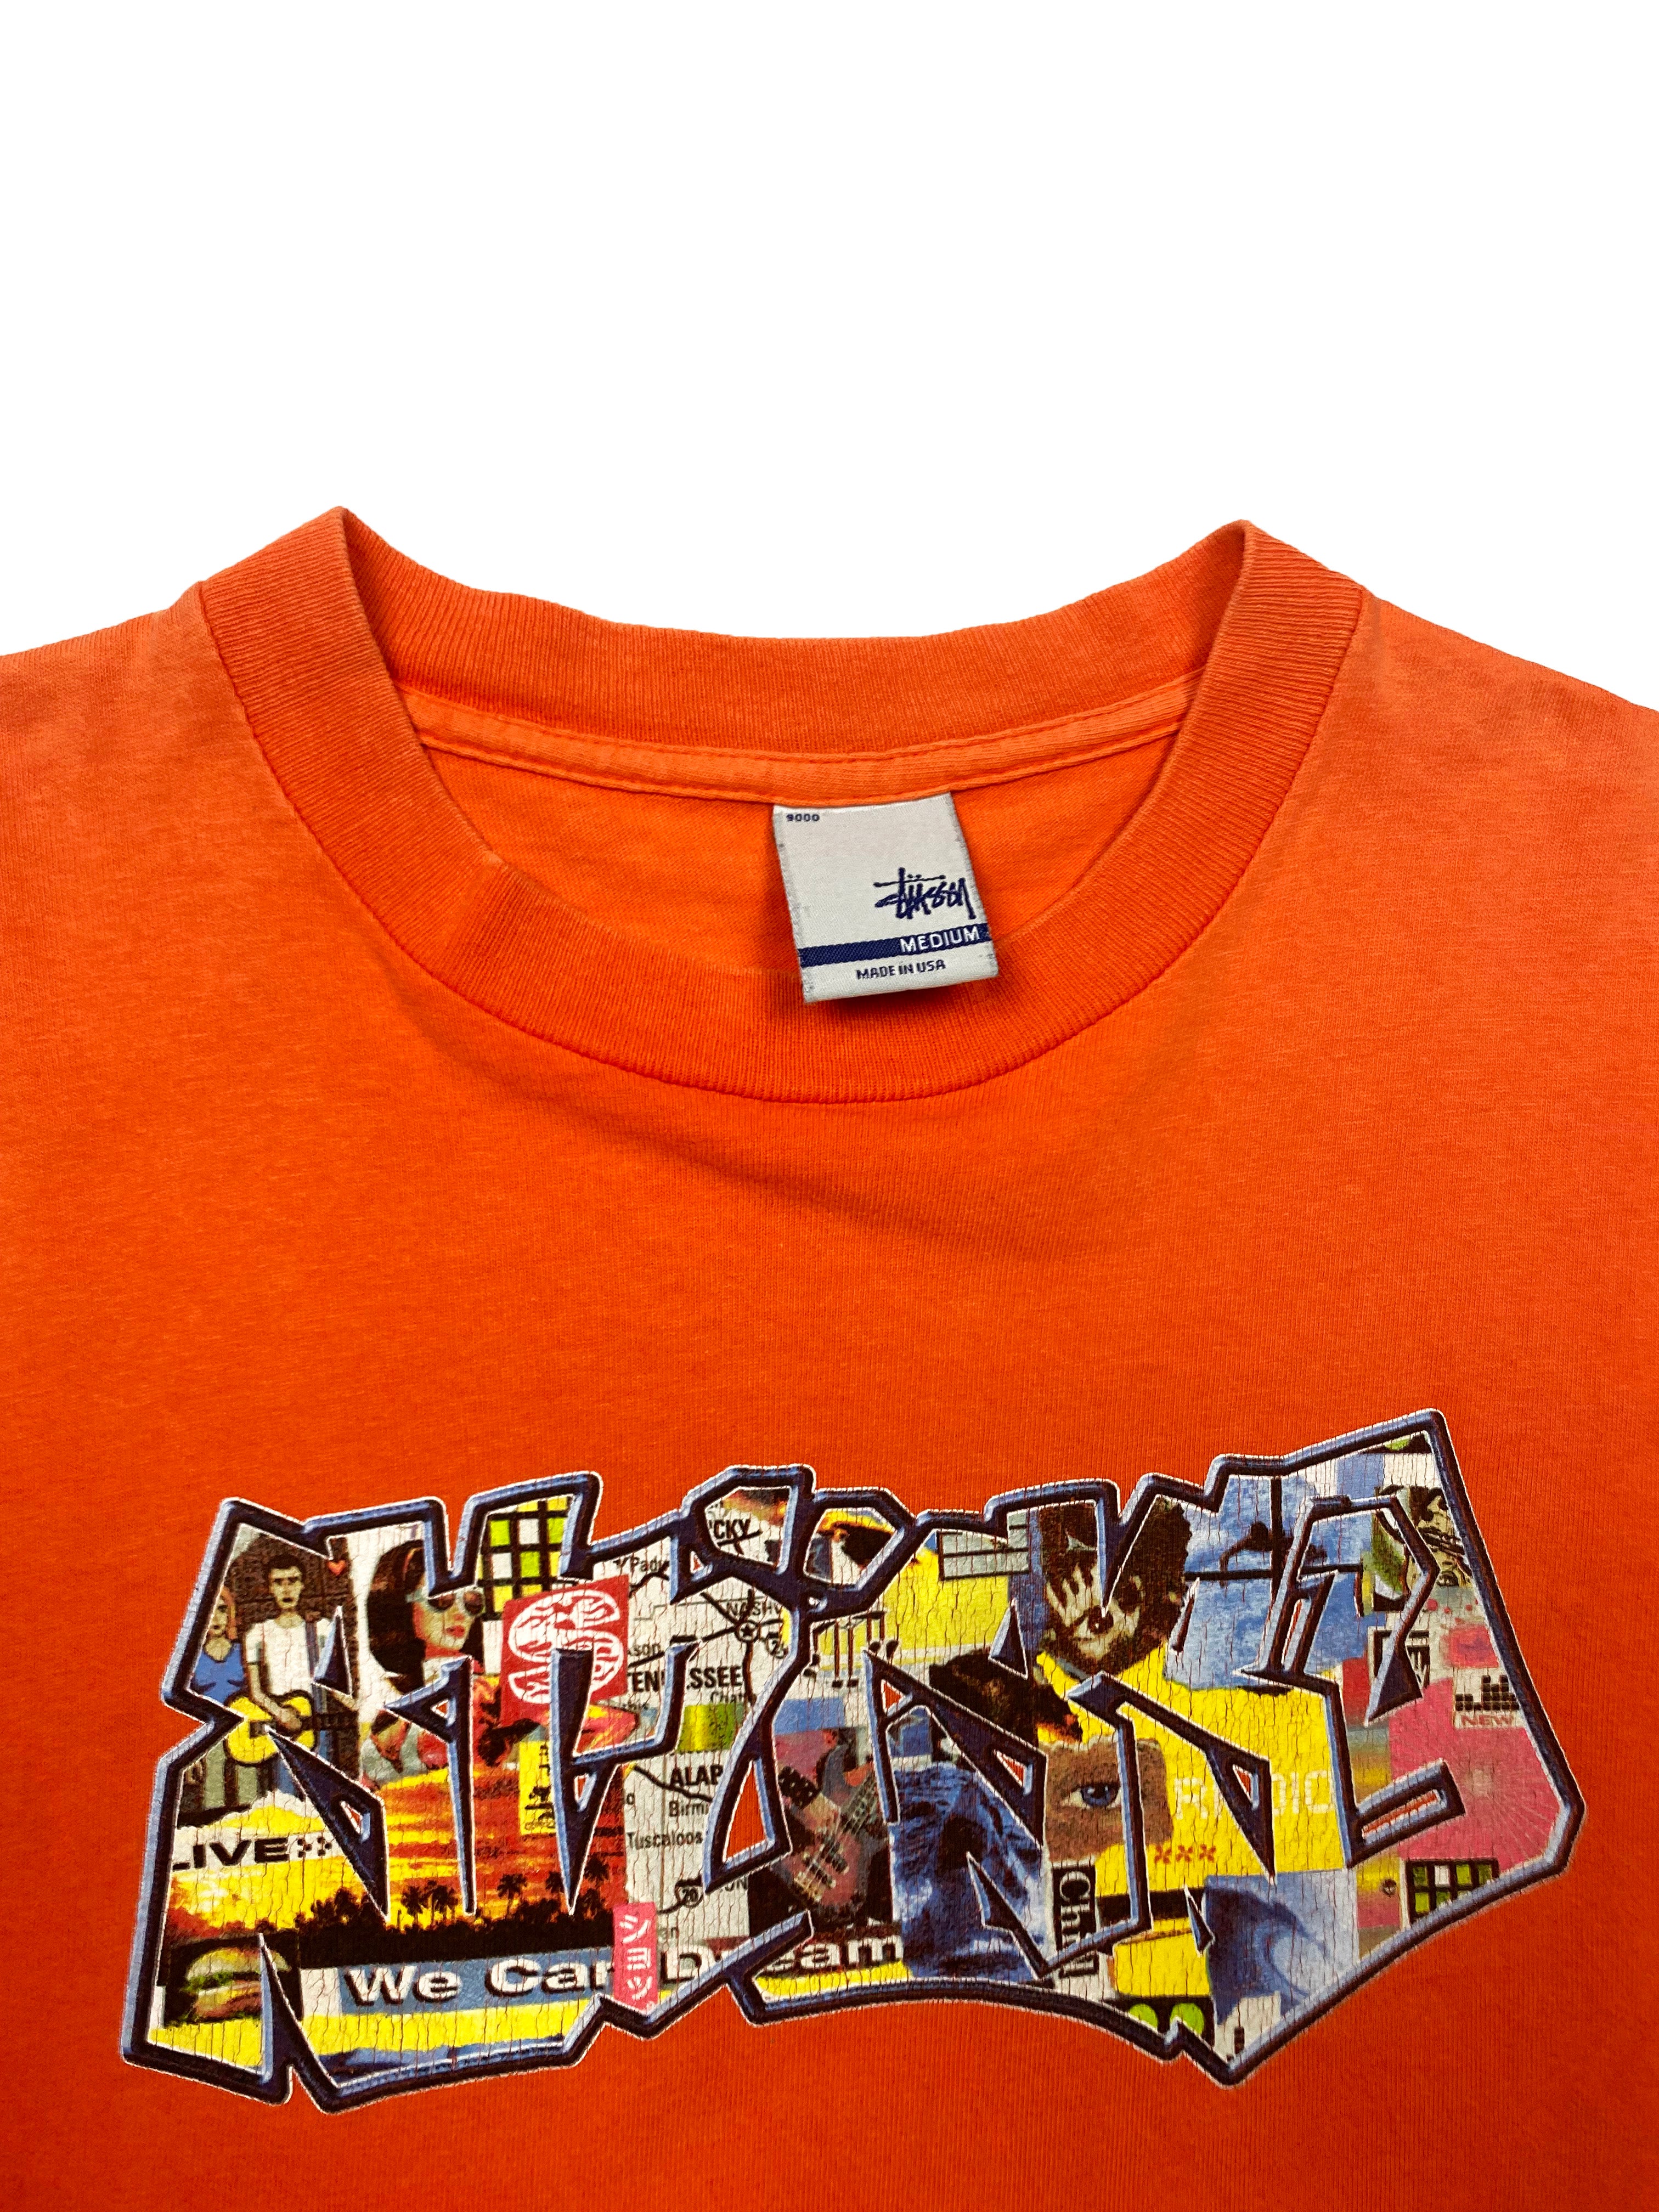 Stussy 'We Can Dream' Orange T-shirt 00's